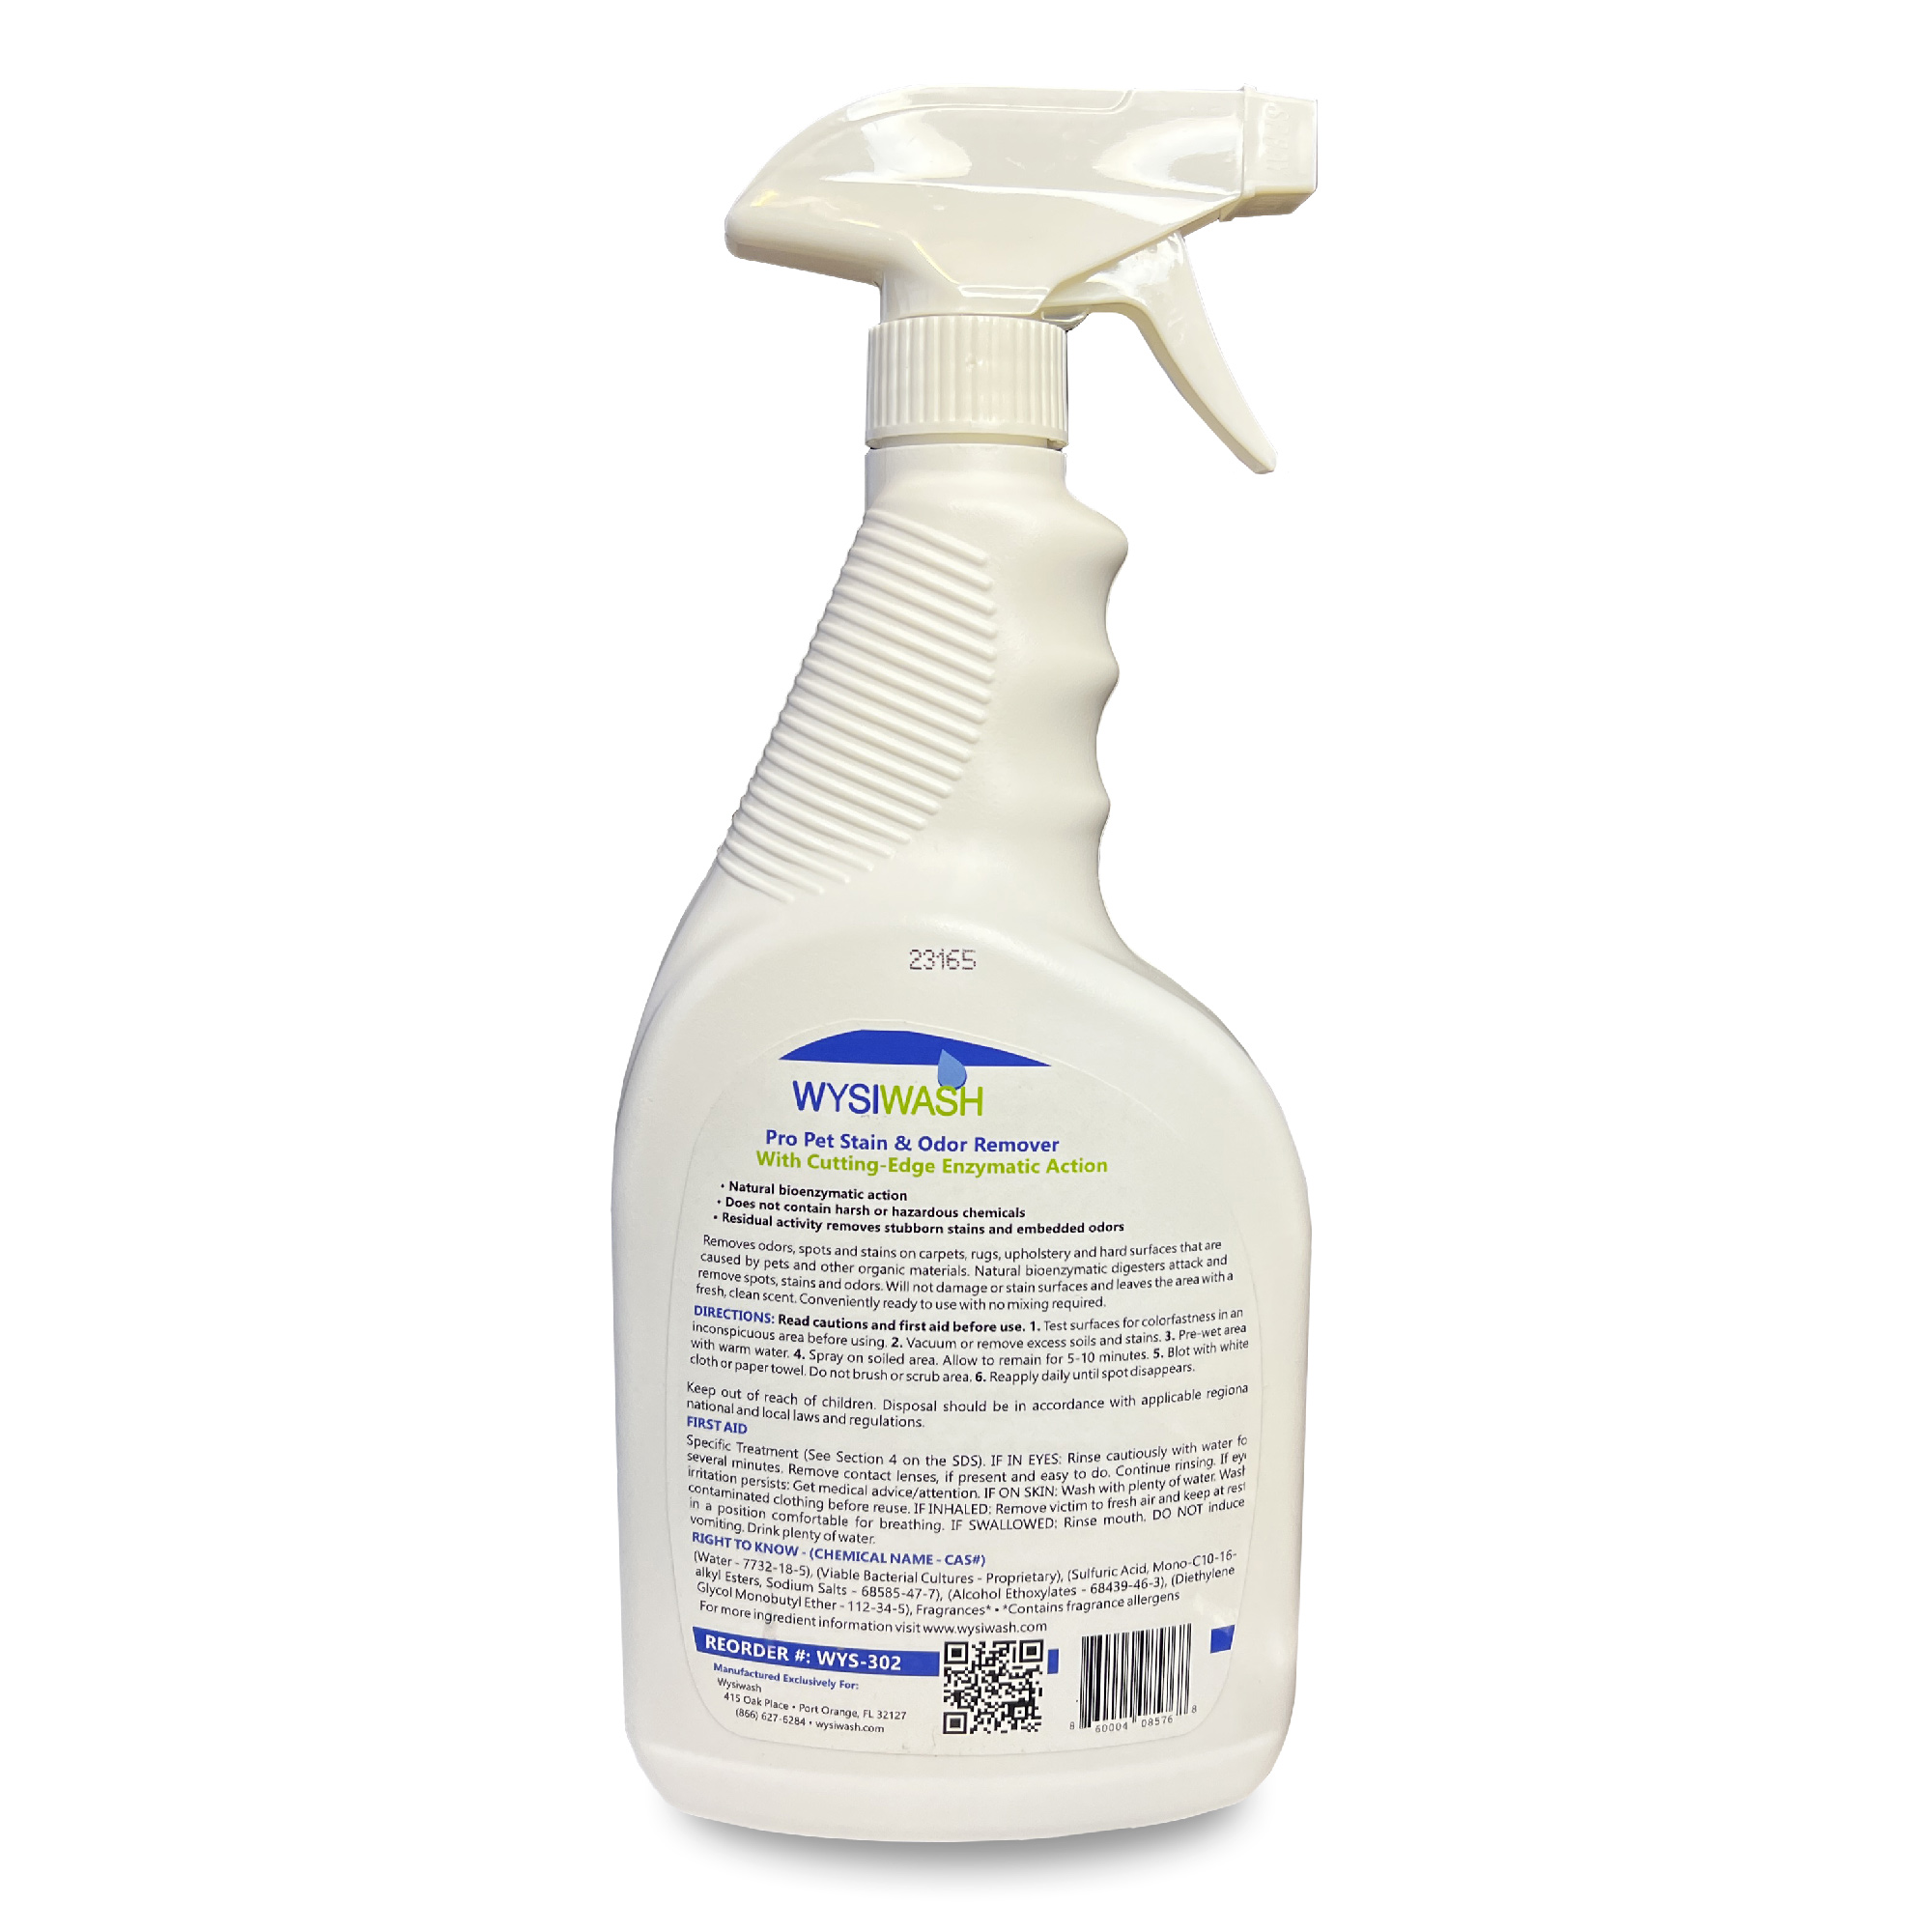 SENTINEL 522RW Smoke & Odor Restoration Cleaning Wipes (290 PK)